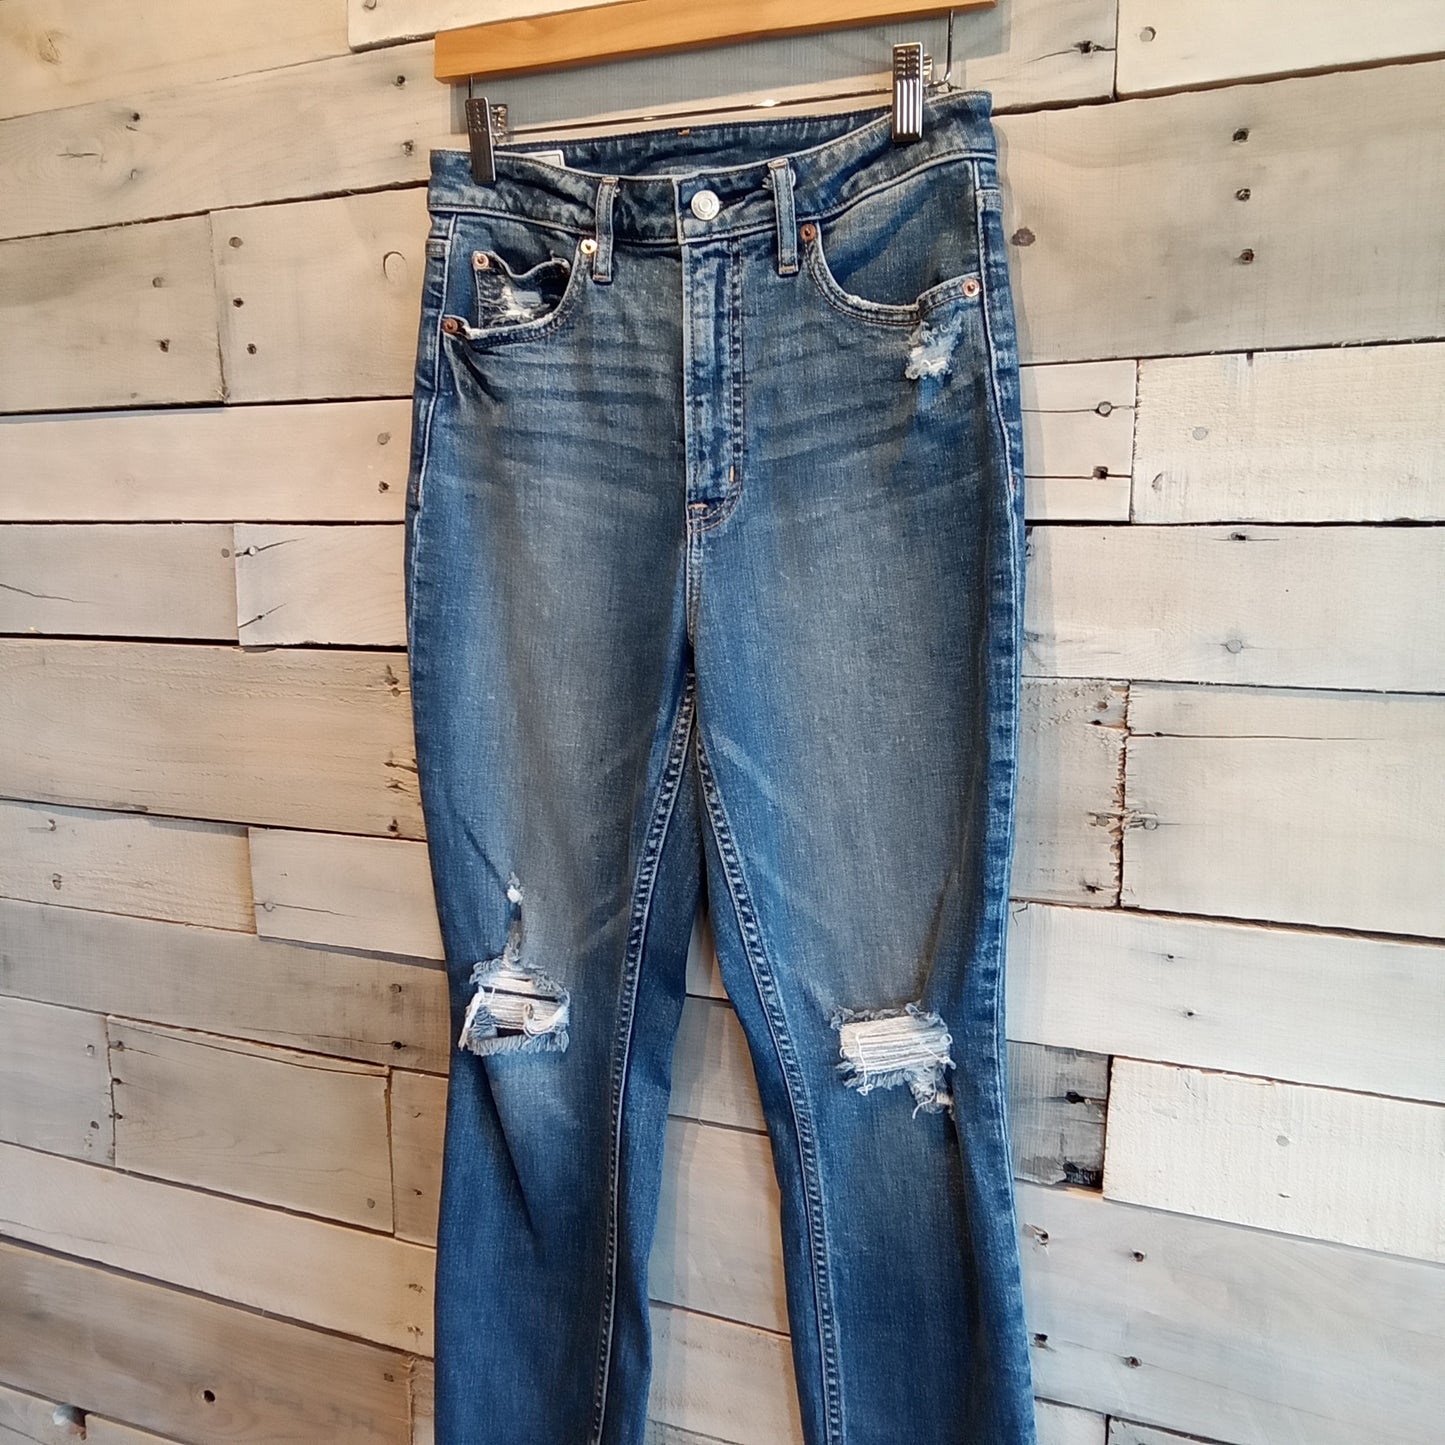 Gap Vintage Slim Sky High Jeans Sz 29